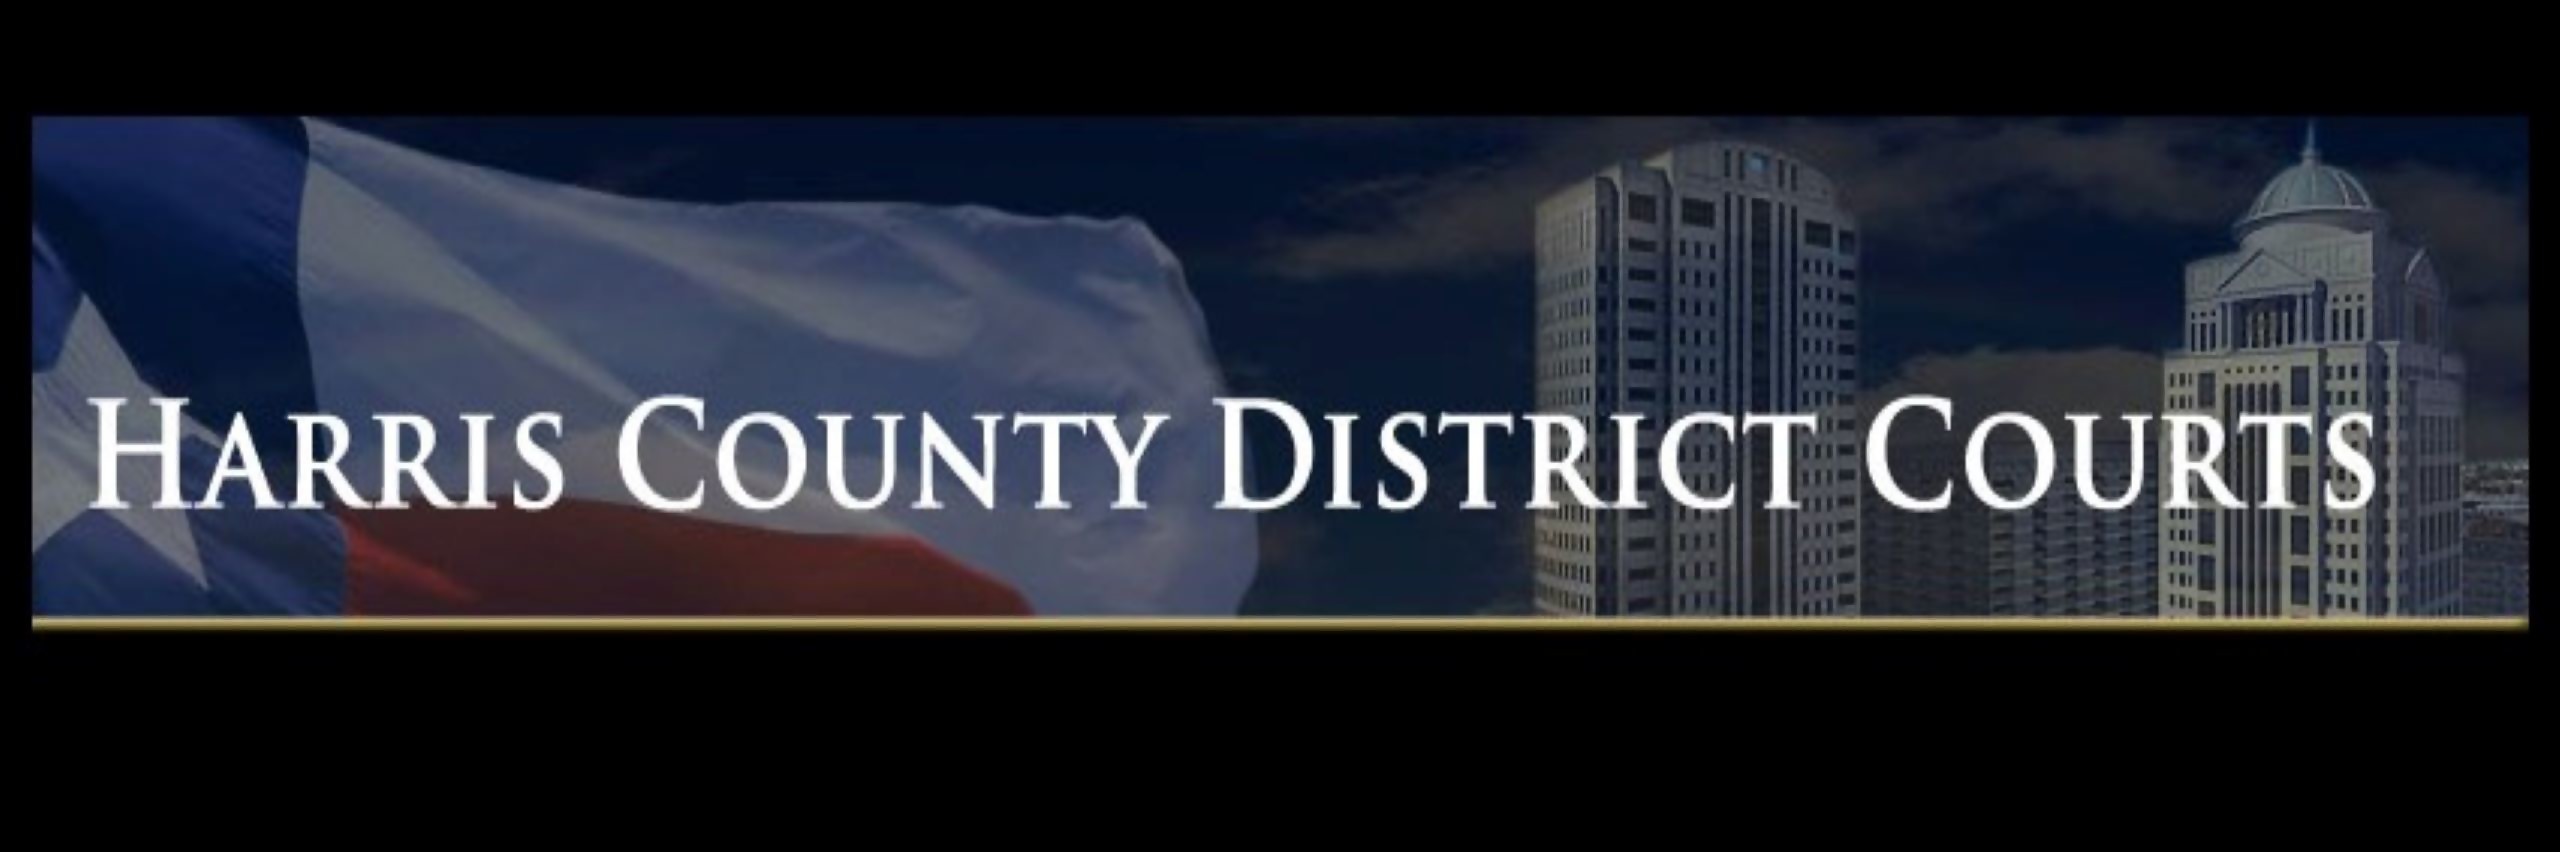 310th District Court AJ - Live Stream